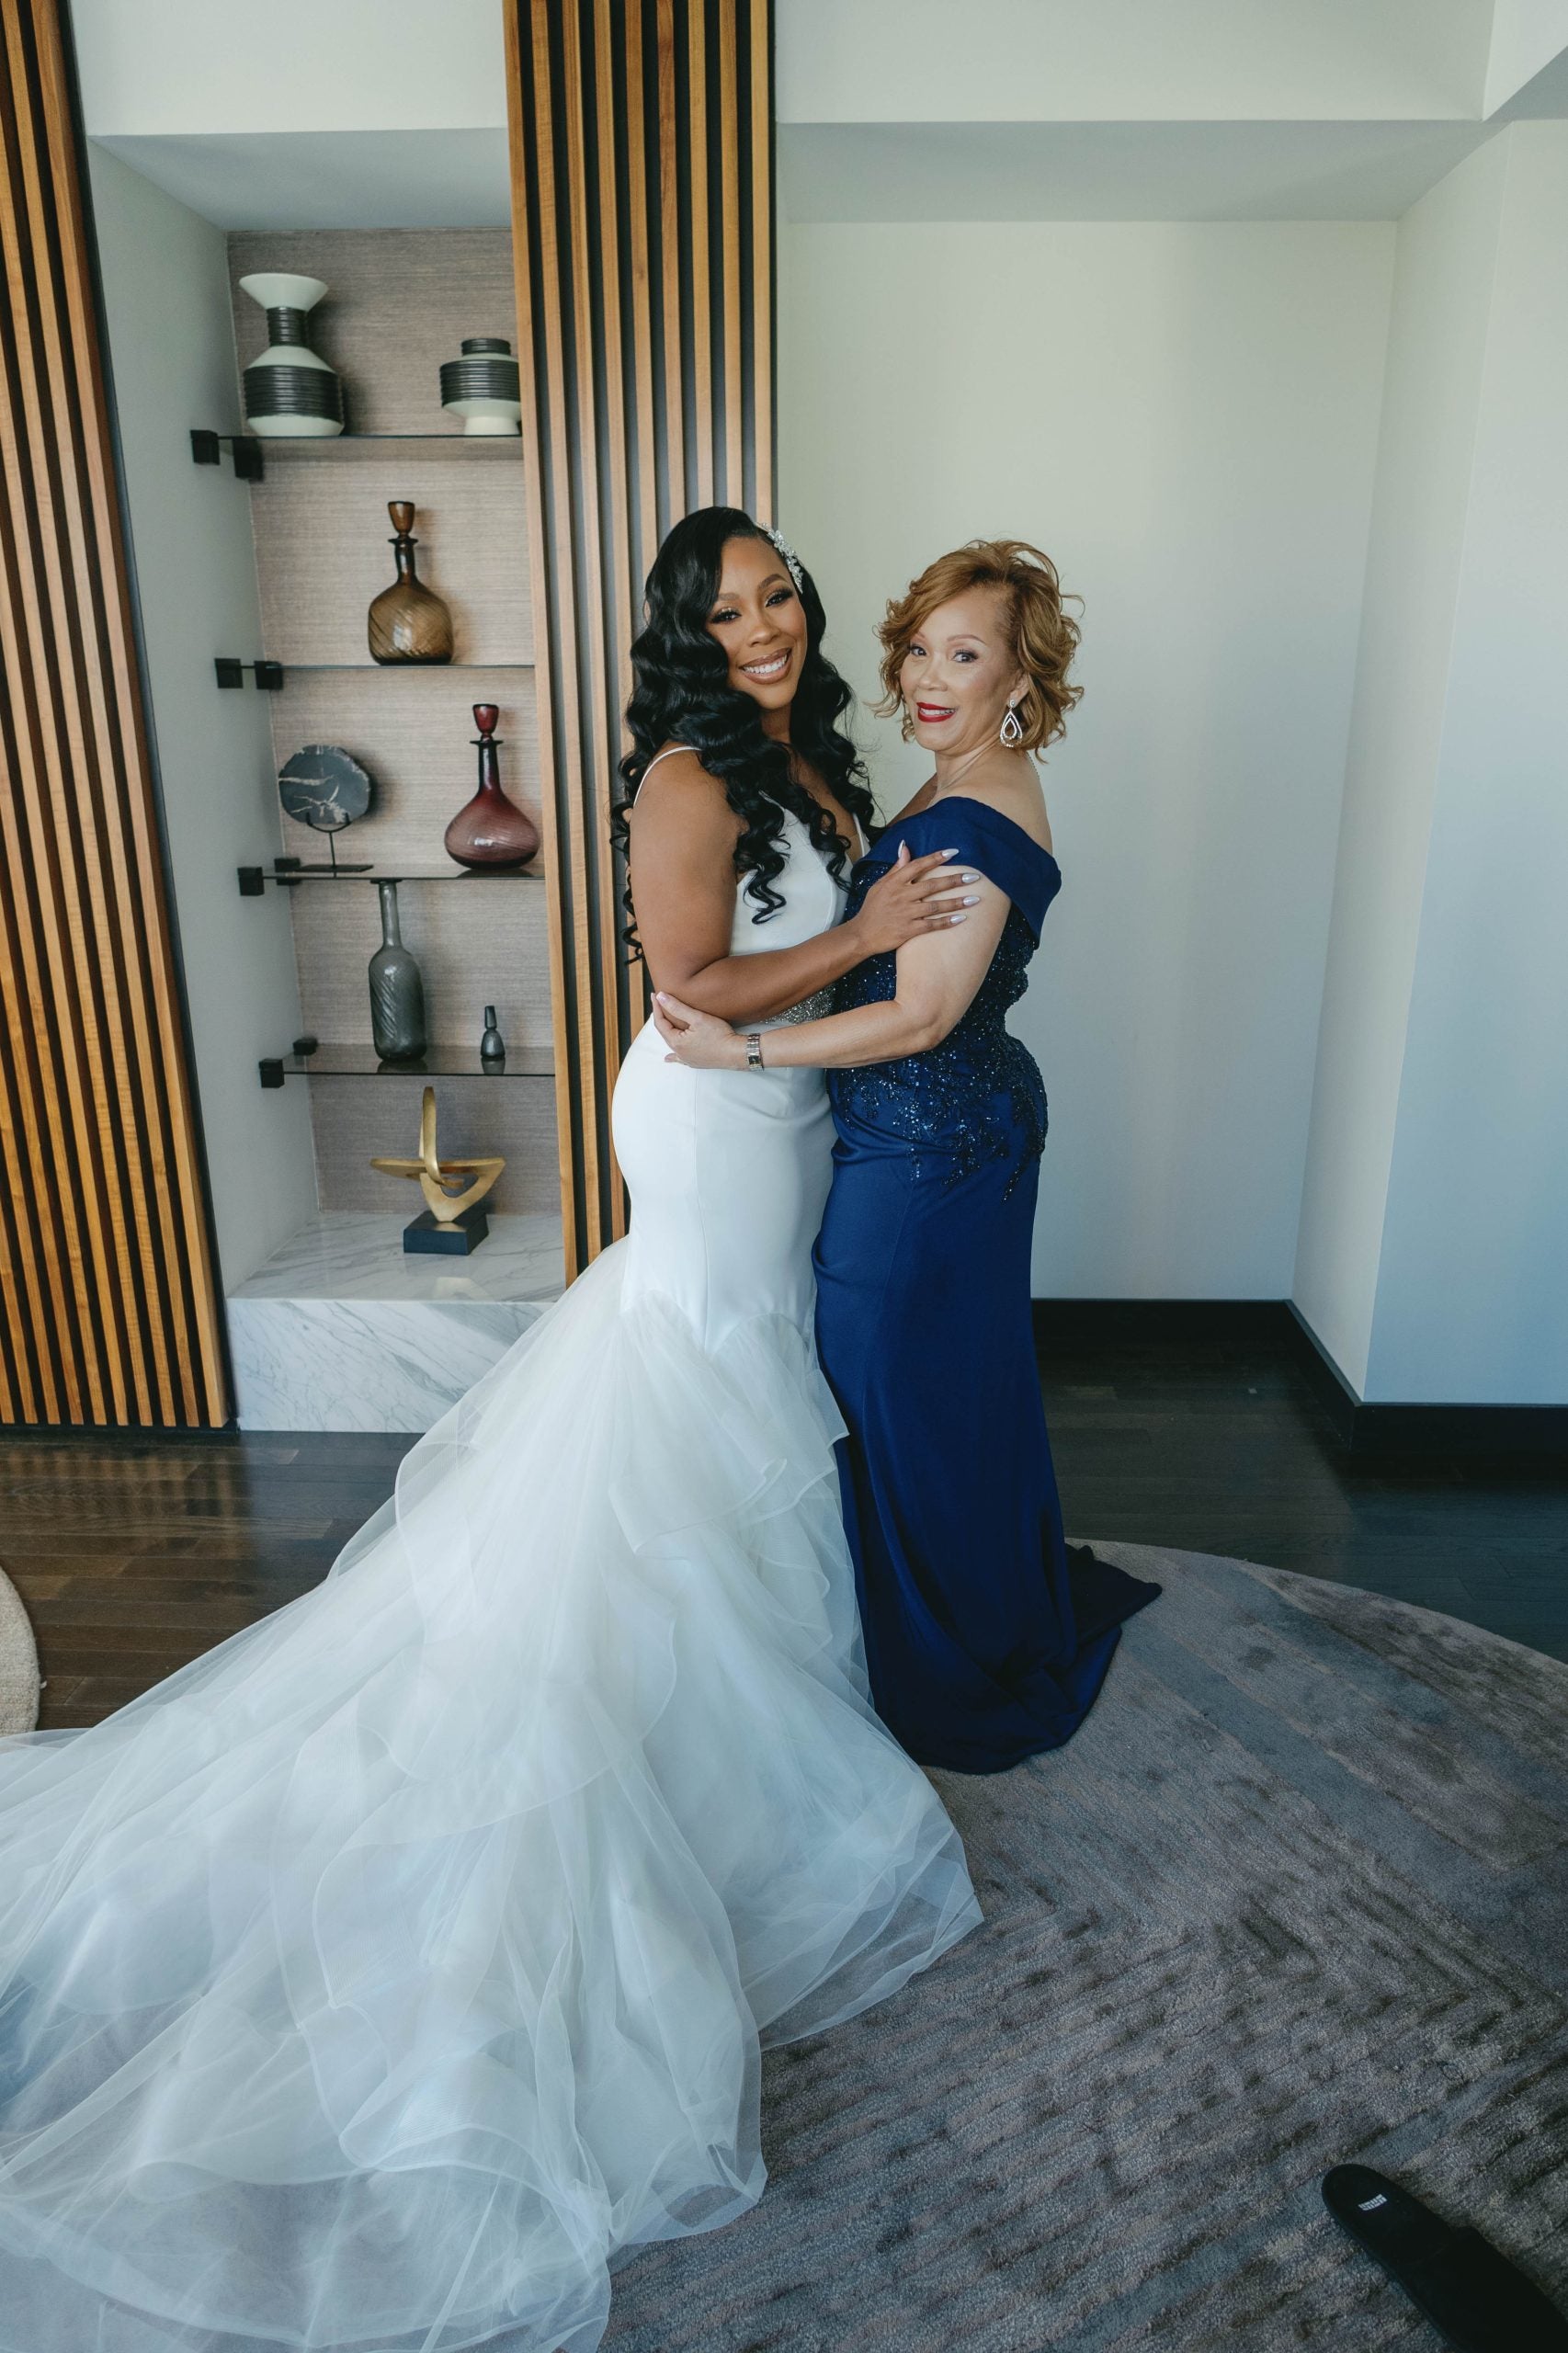 Bridal Bliss: Inside Professional Baseball Player Taylor Hearn's Dallas Wedding To Andrea Hawkins